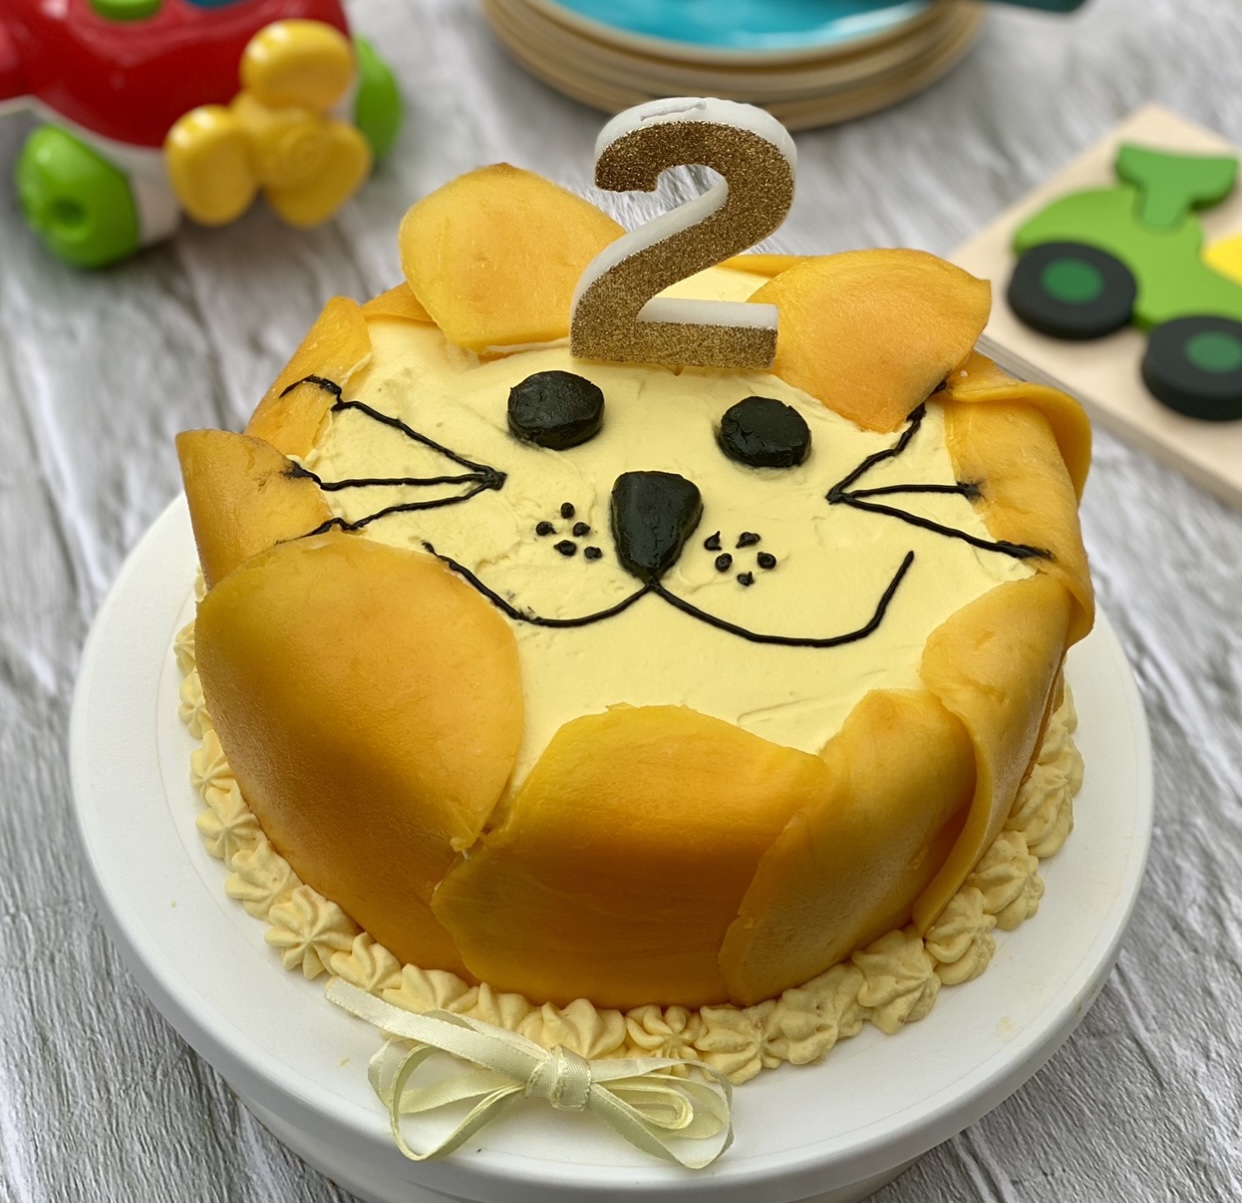 Animal theme lion face cake #wendyscakehut - Wendy's Cake Hut | Facebook